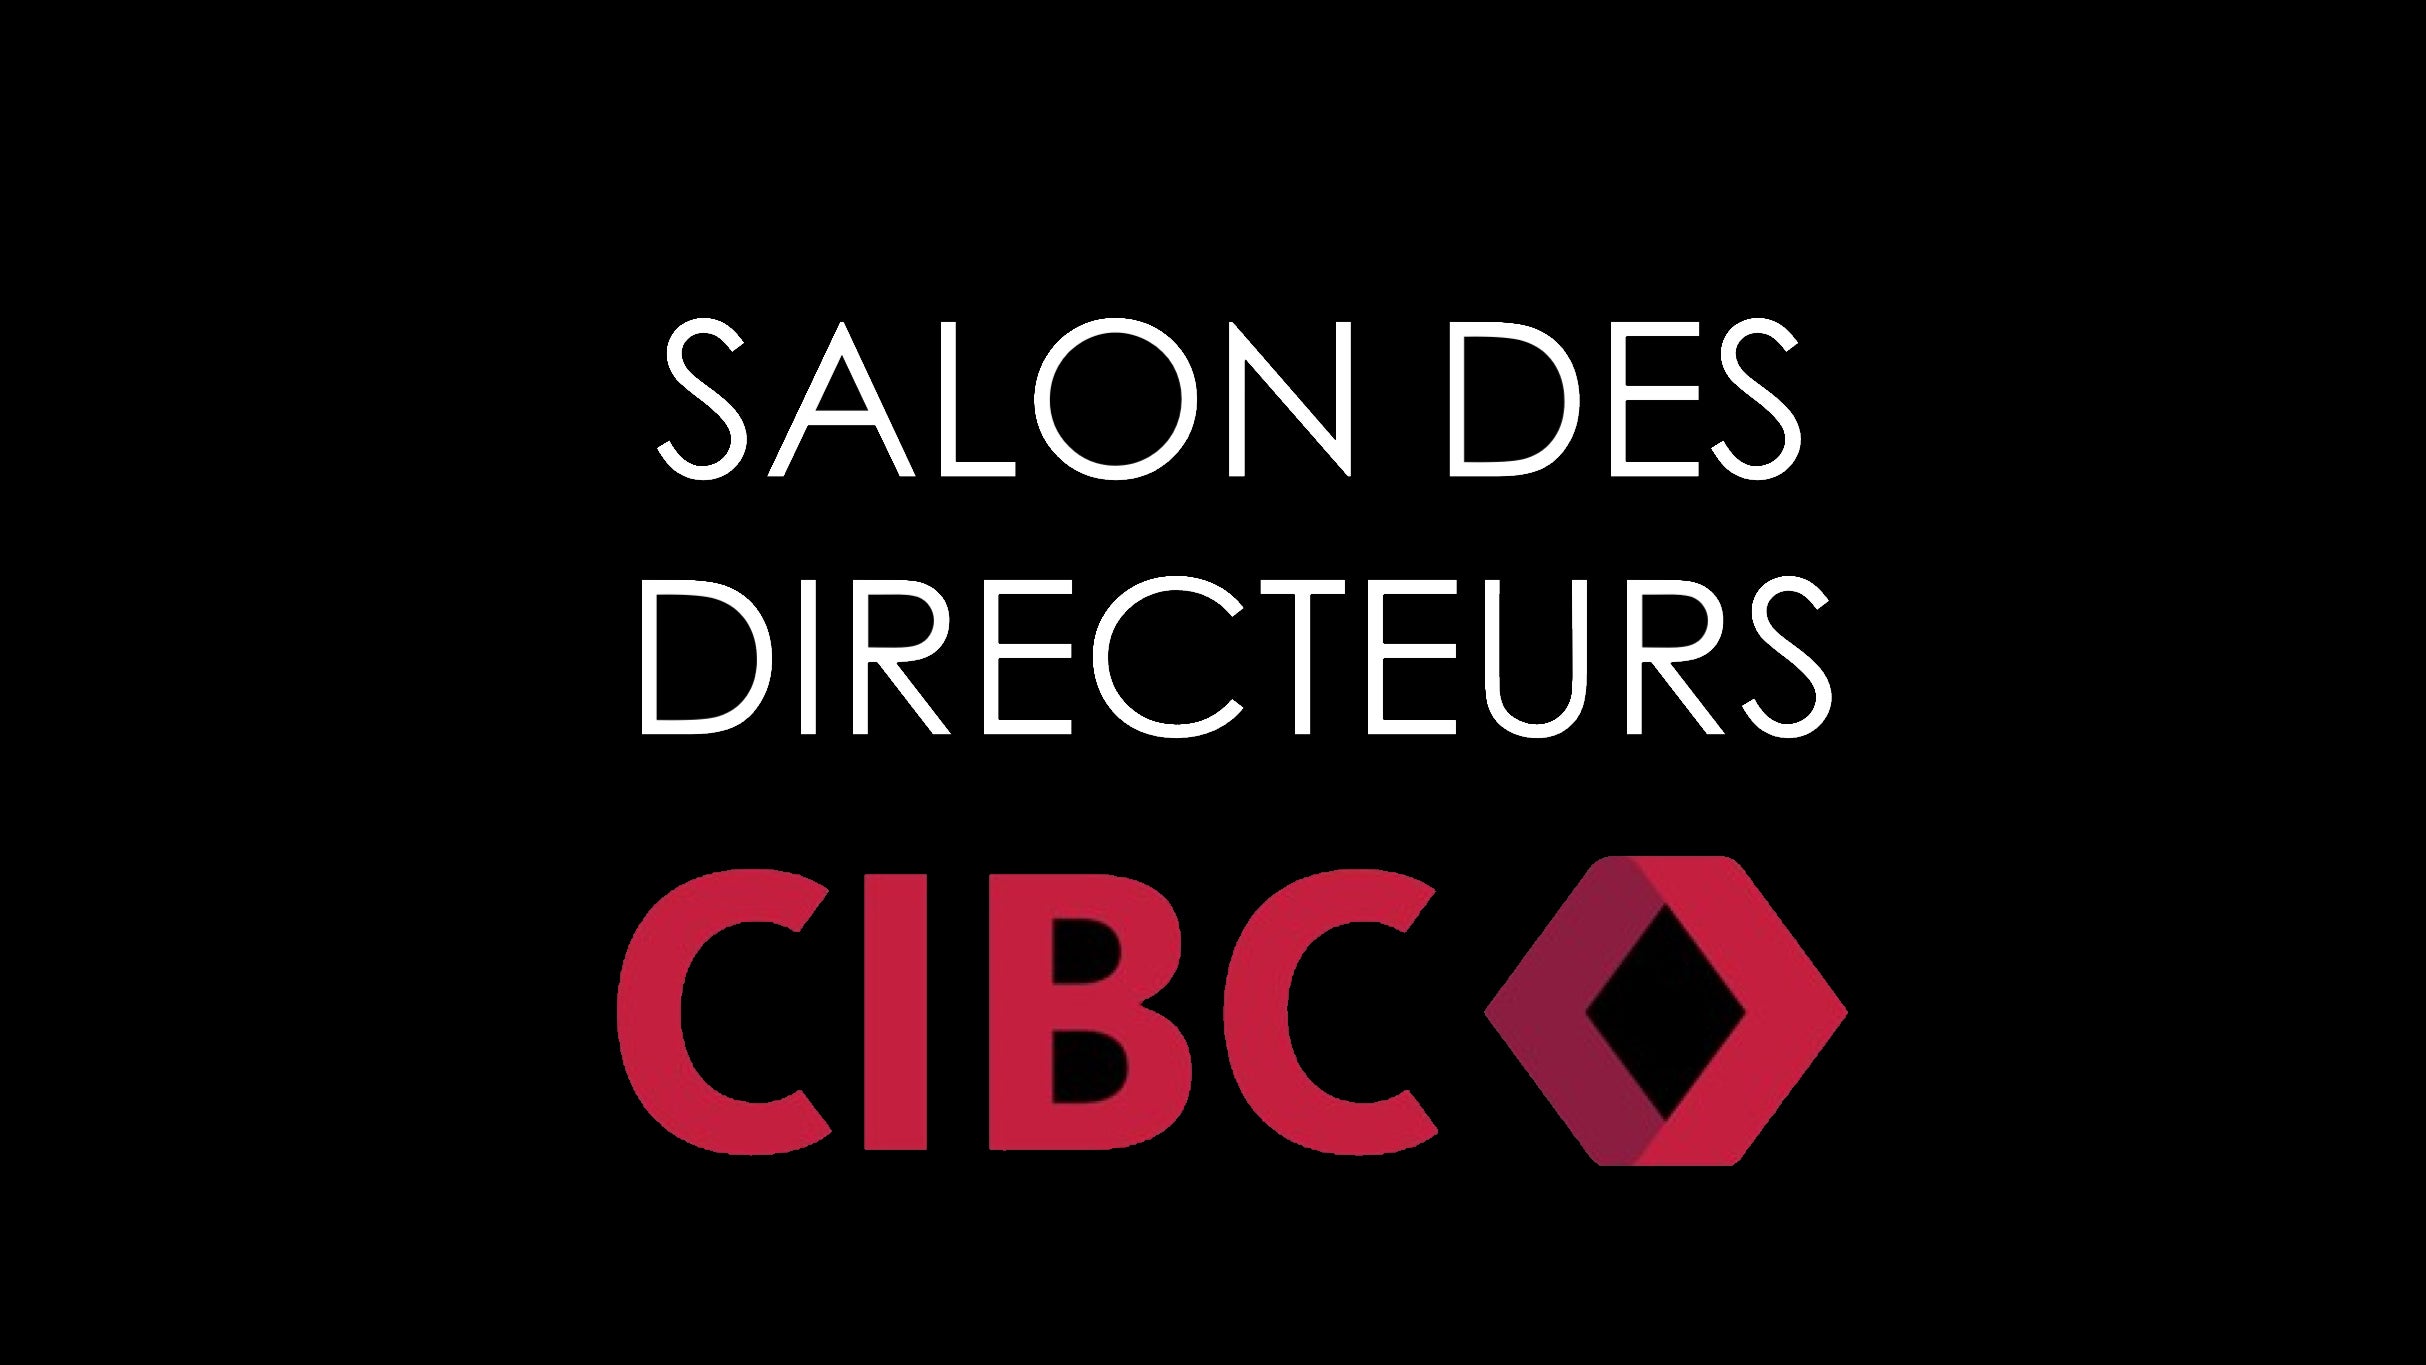 Salon des Directeurs CIBC presale information on freepresalepasswords.com